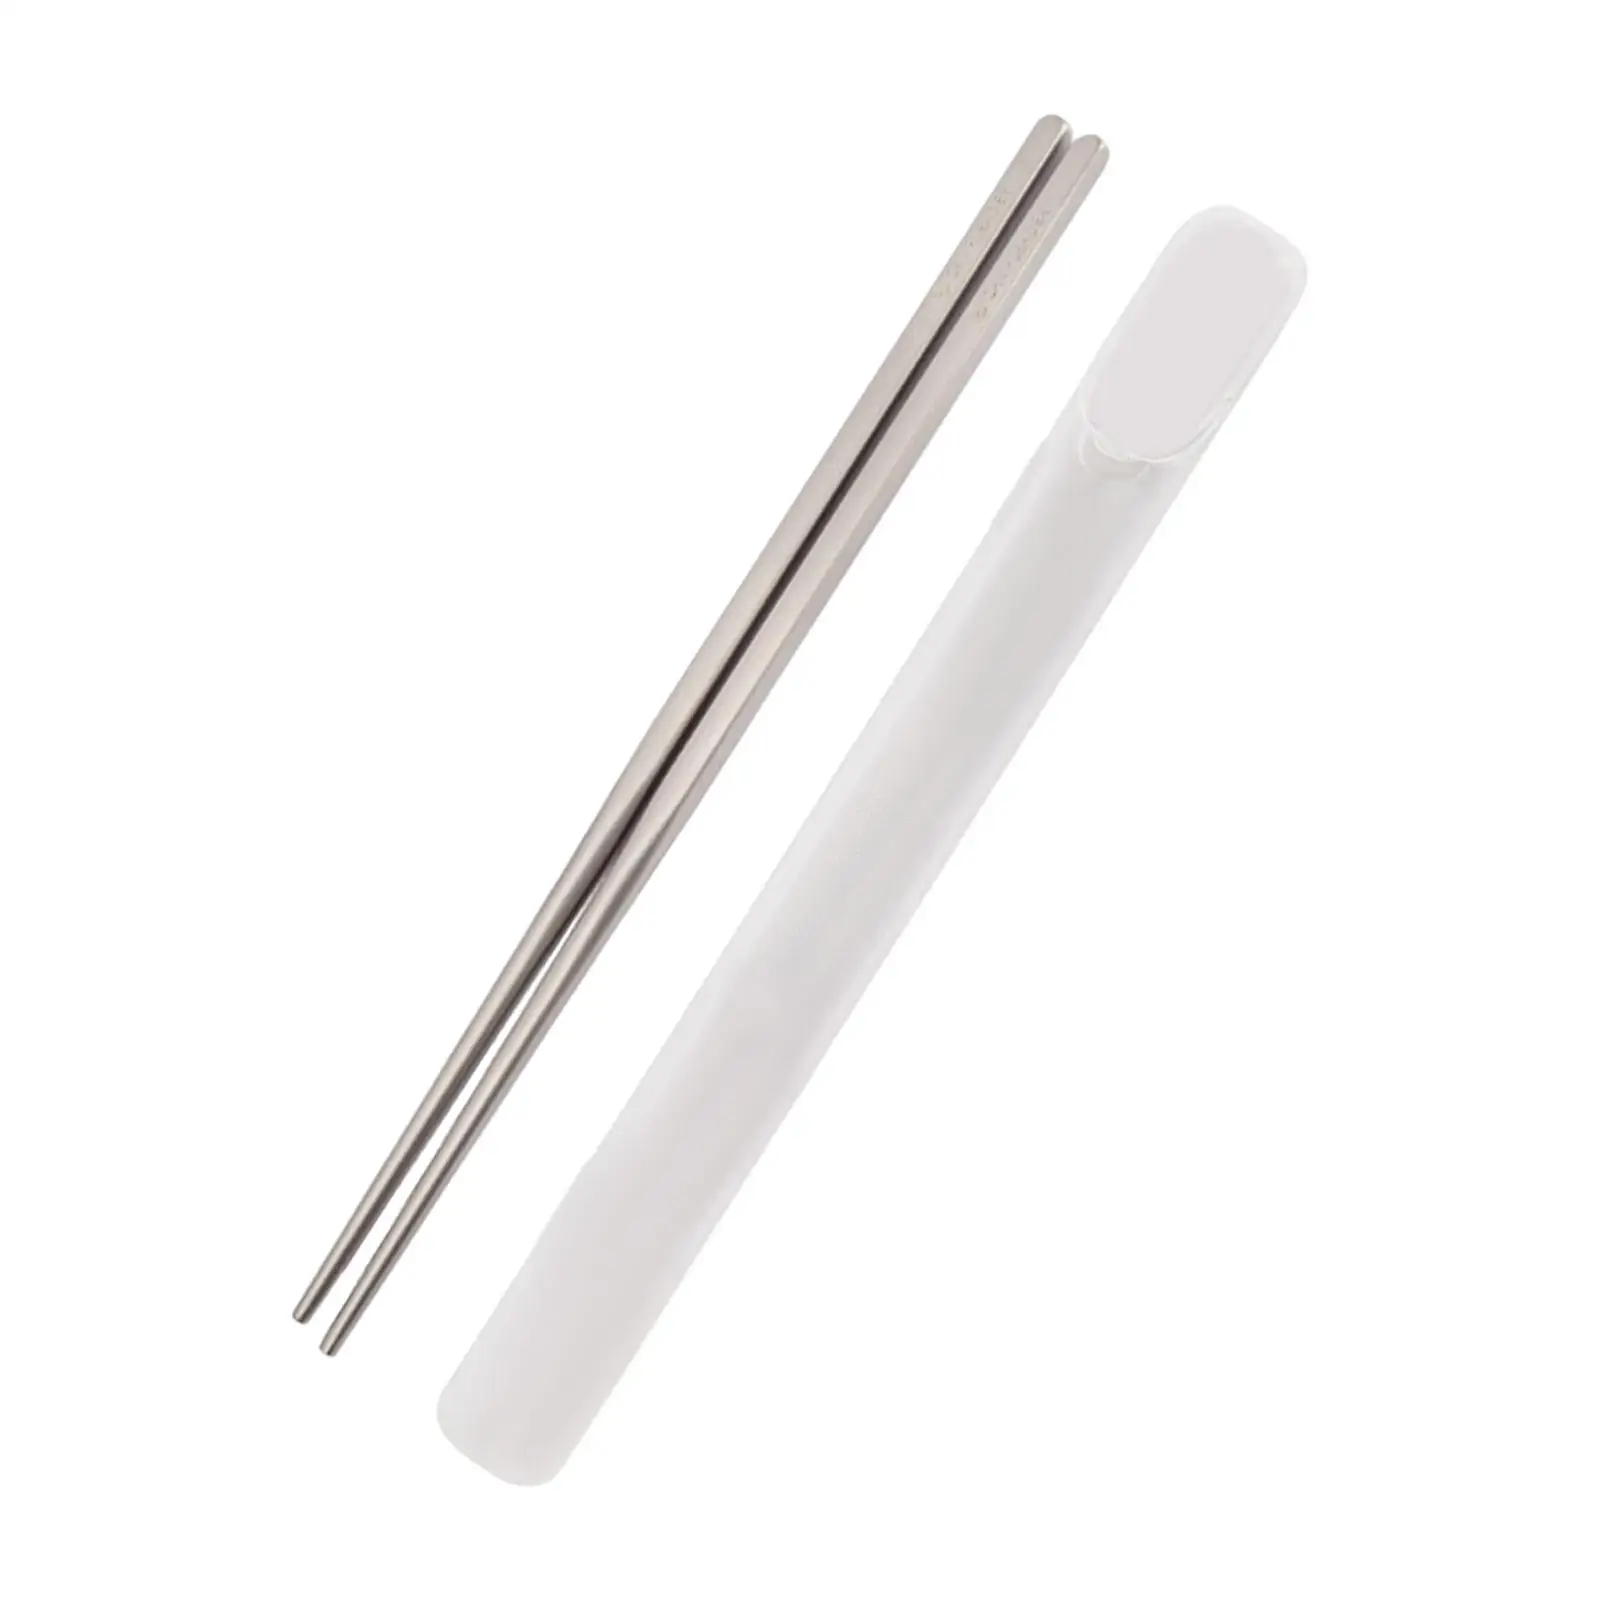 Premium titanium chopsticks, lightweight and reusable, great for travel,